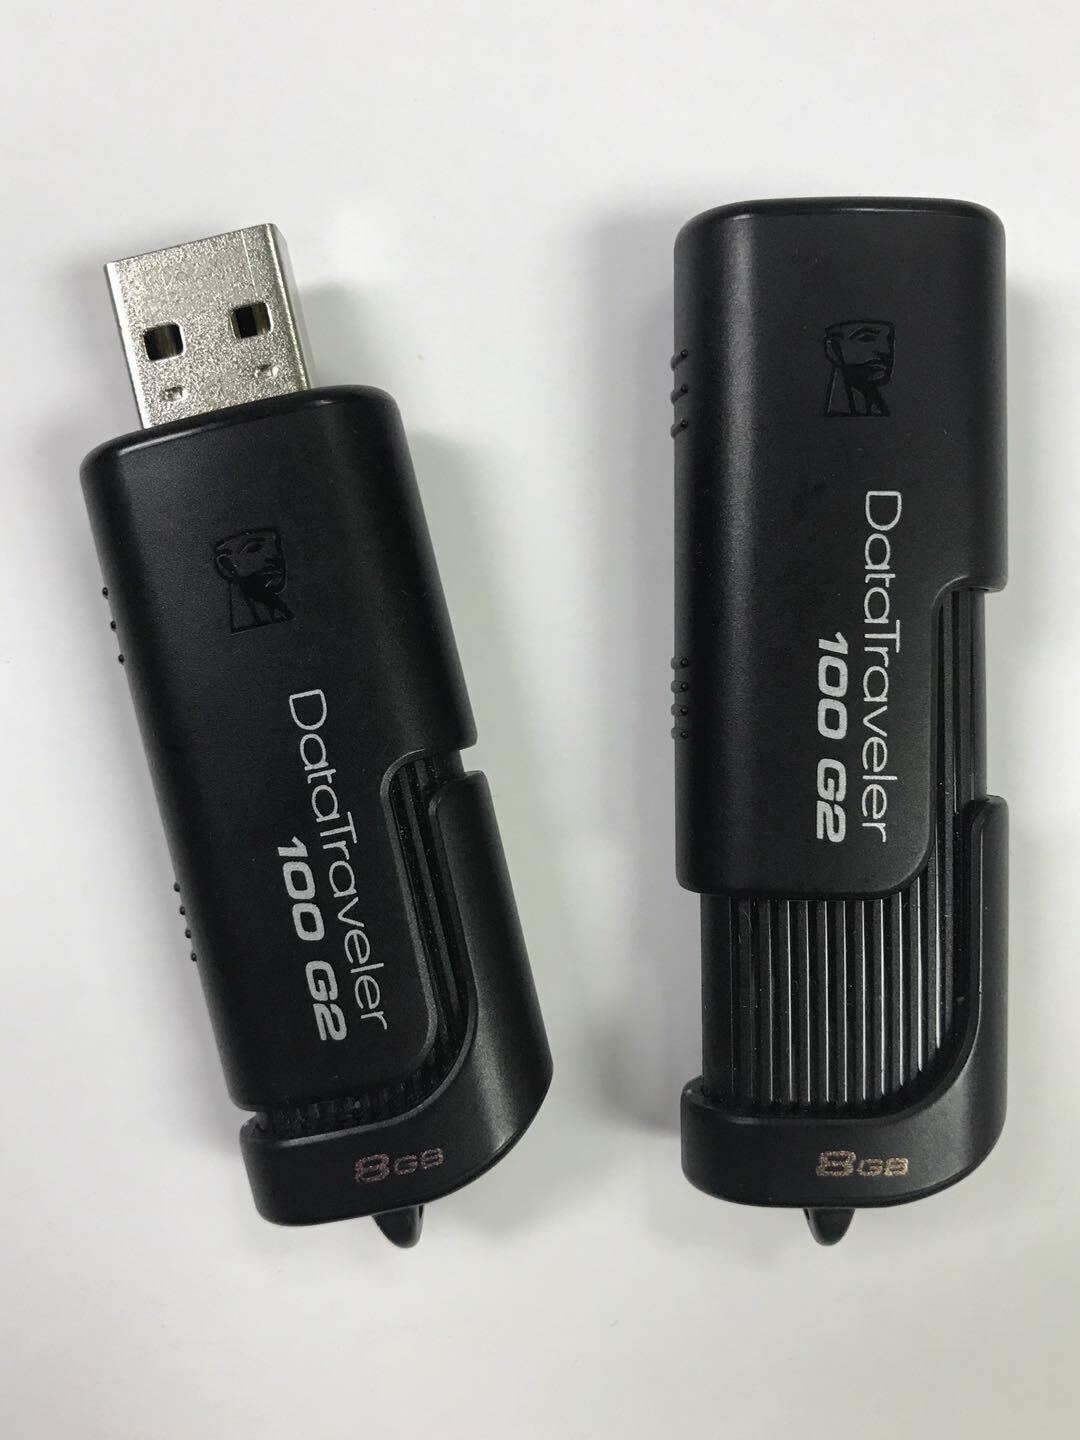 2 PCS Kingston DataTraveler 100 G2 8GB USB Flash Drive,DT-100G2/WMS1 